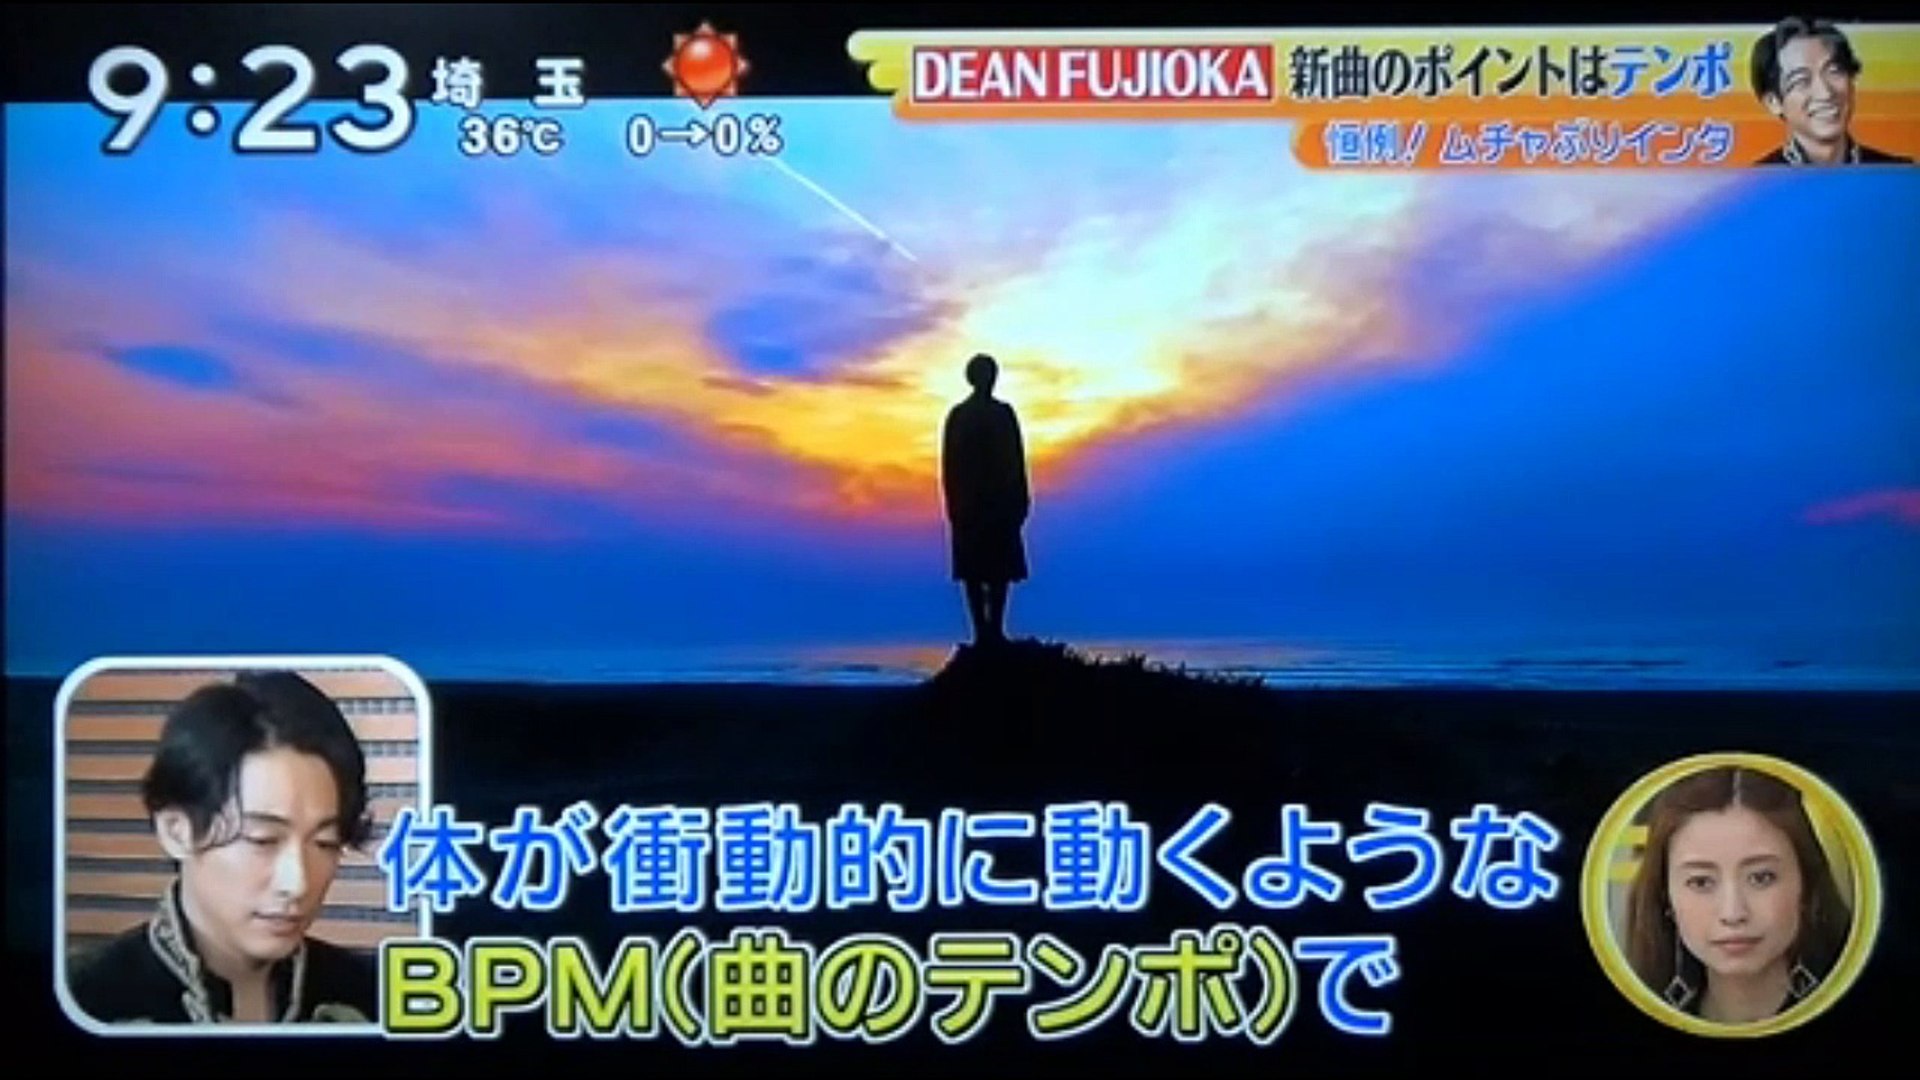 Dean Fujioka ディーン フジオカ ムチャぶりインタビュー 動画 Dailymotion